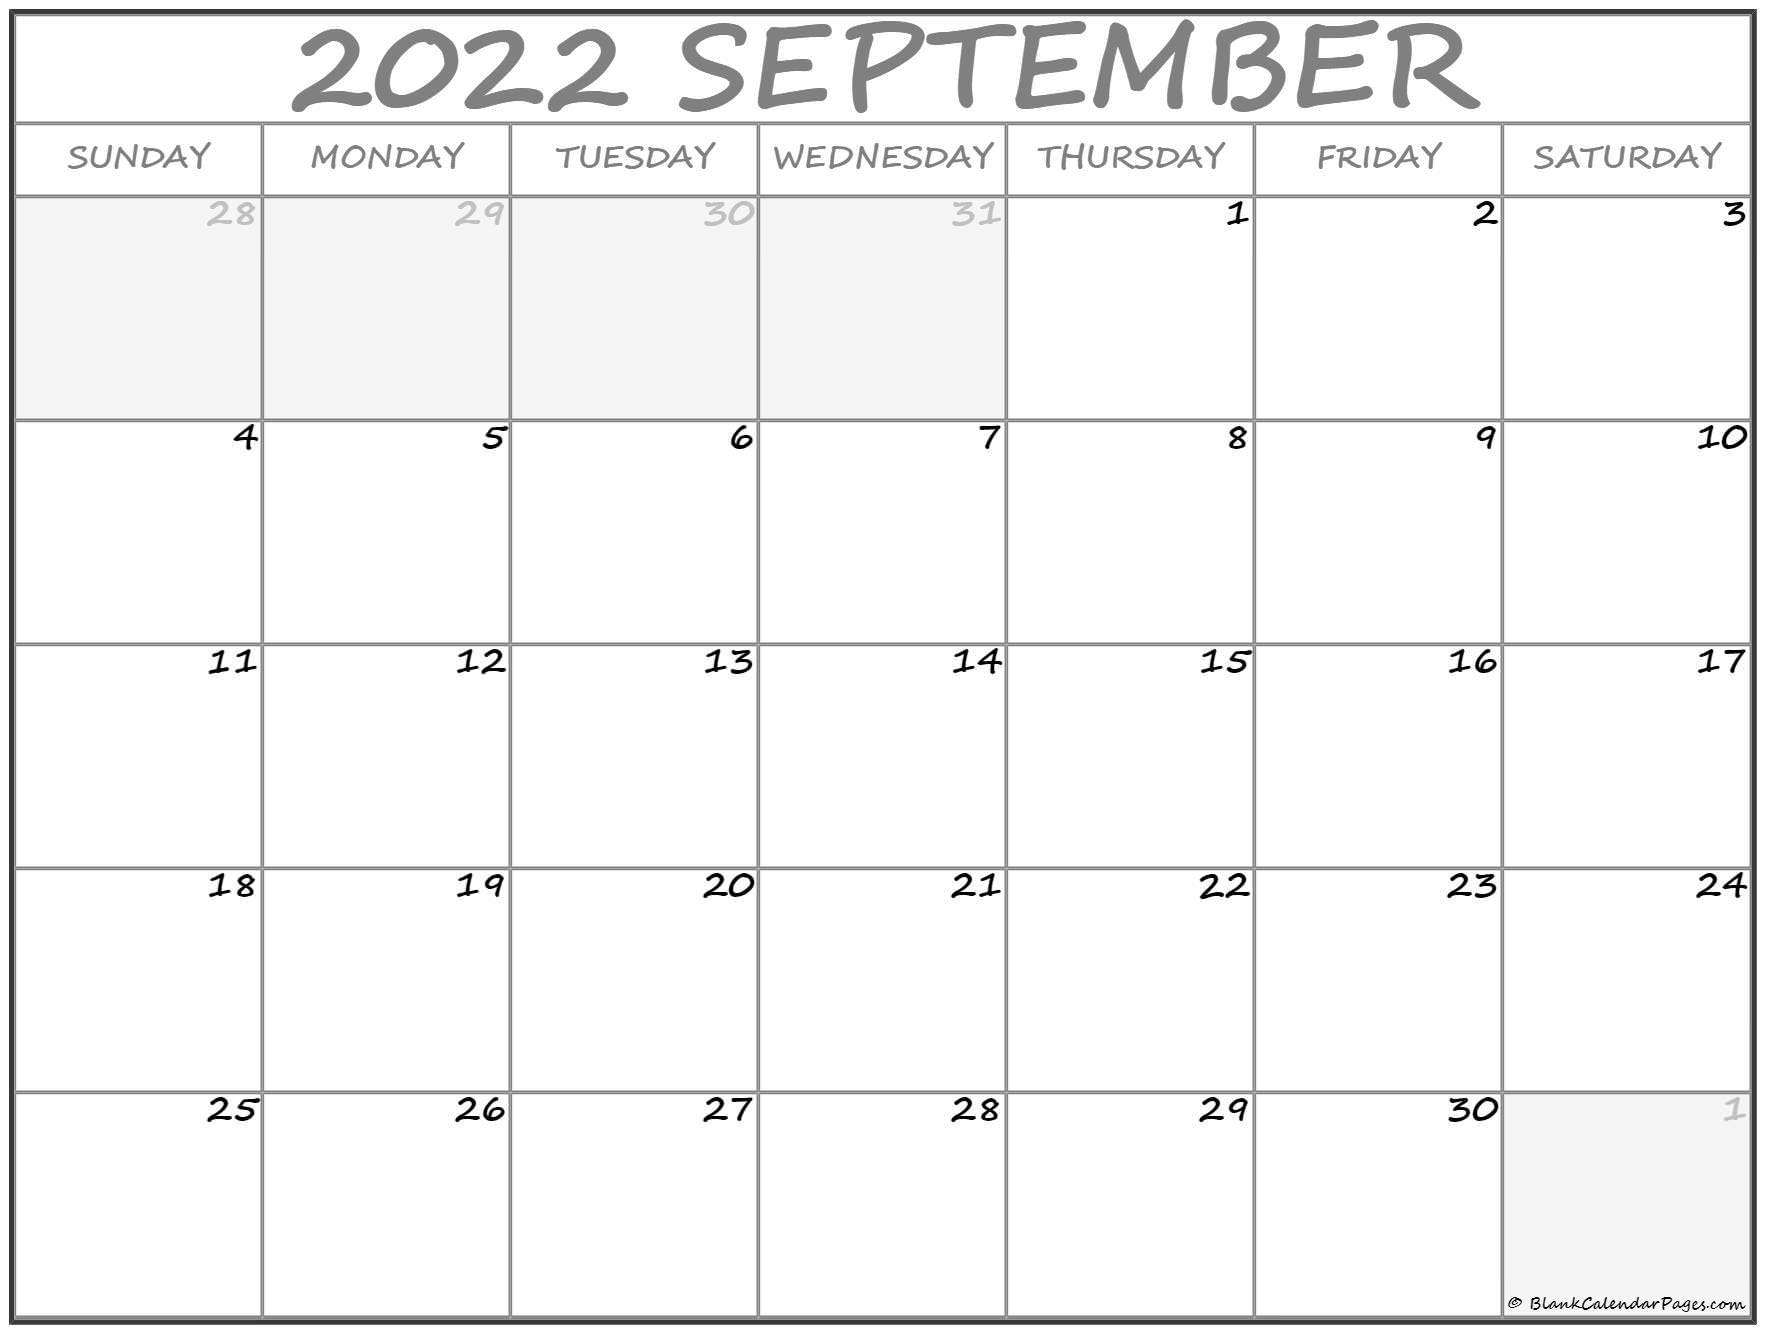 September 2022 Calendar | Free Printable Calendar Templates throughout Calendar September 2022 To August 2022